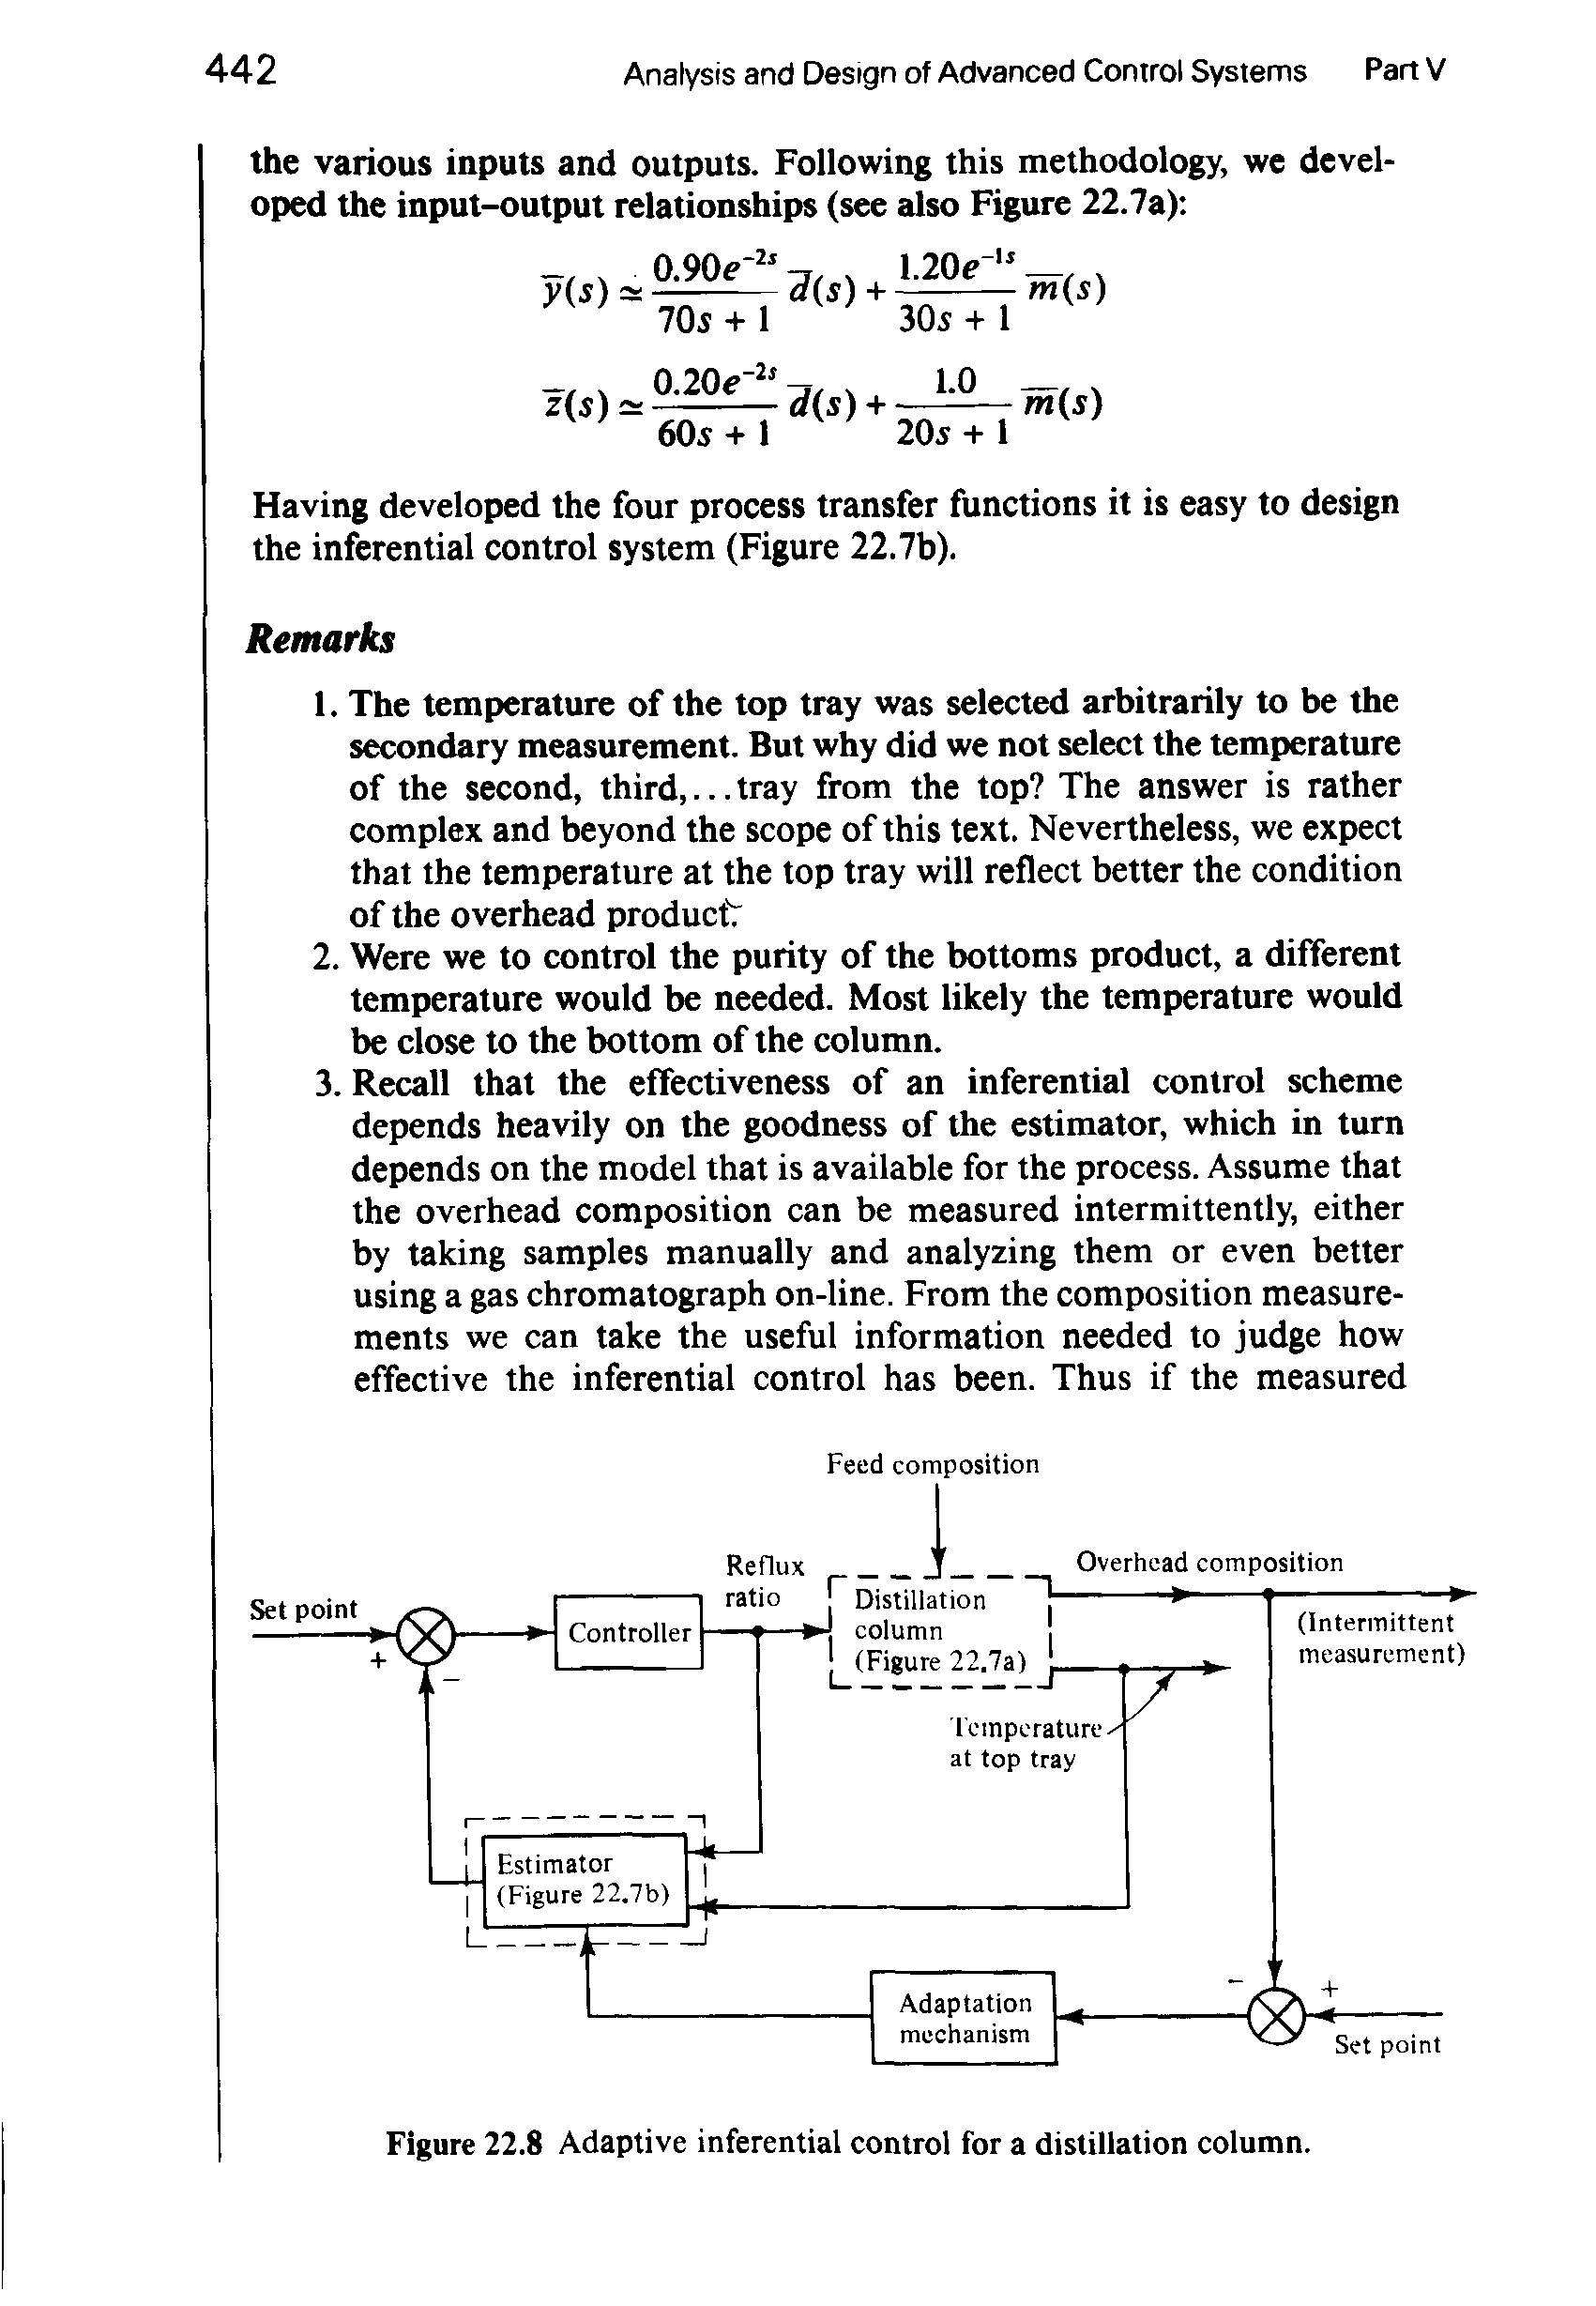 Figure 22.8 Adaptive inferential control for a distillation column.